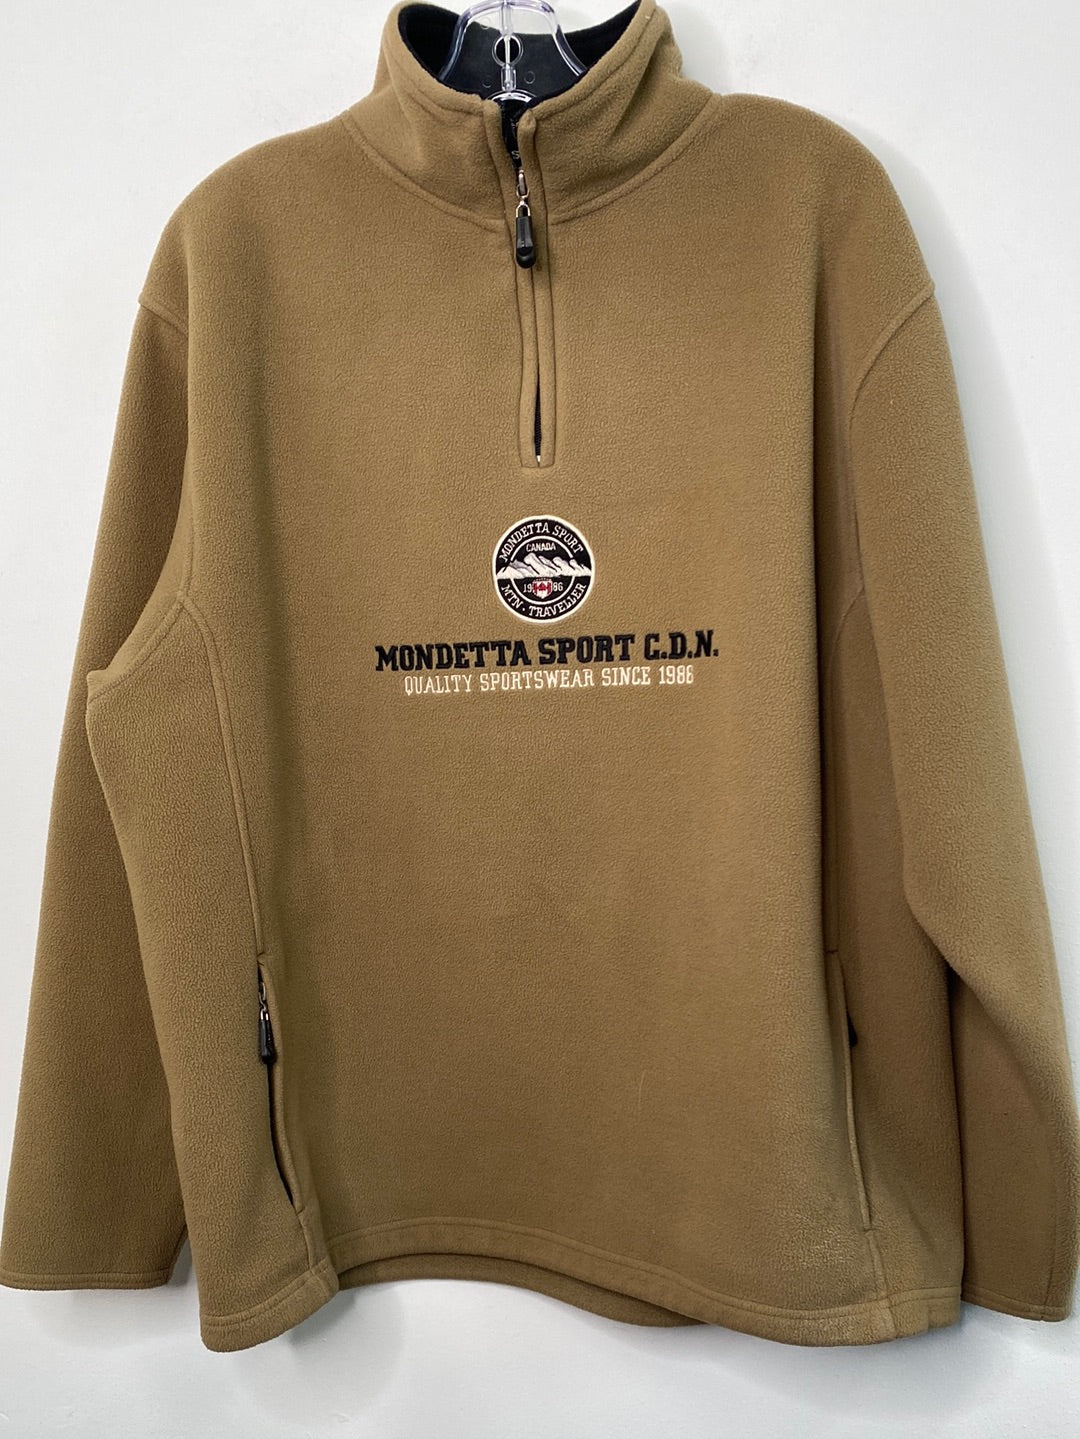 Mondetta activewear hoodie jacket